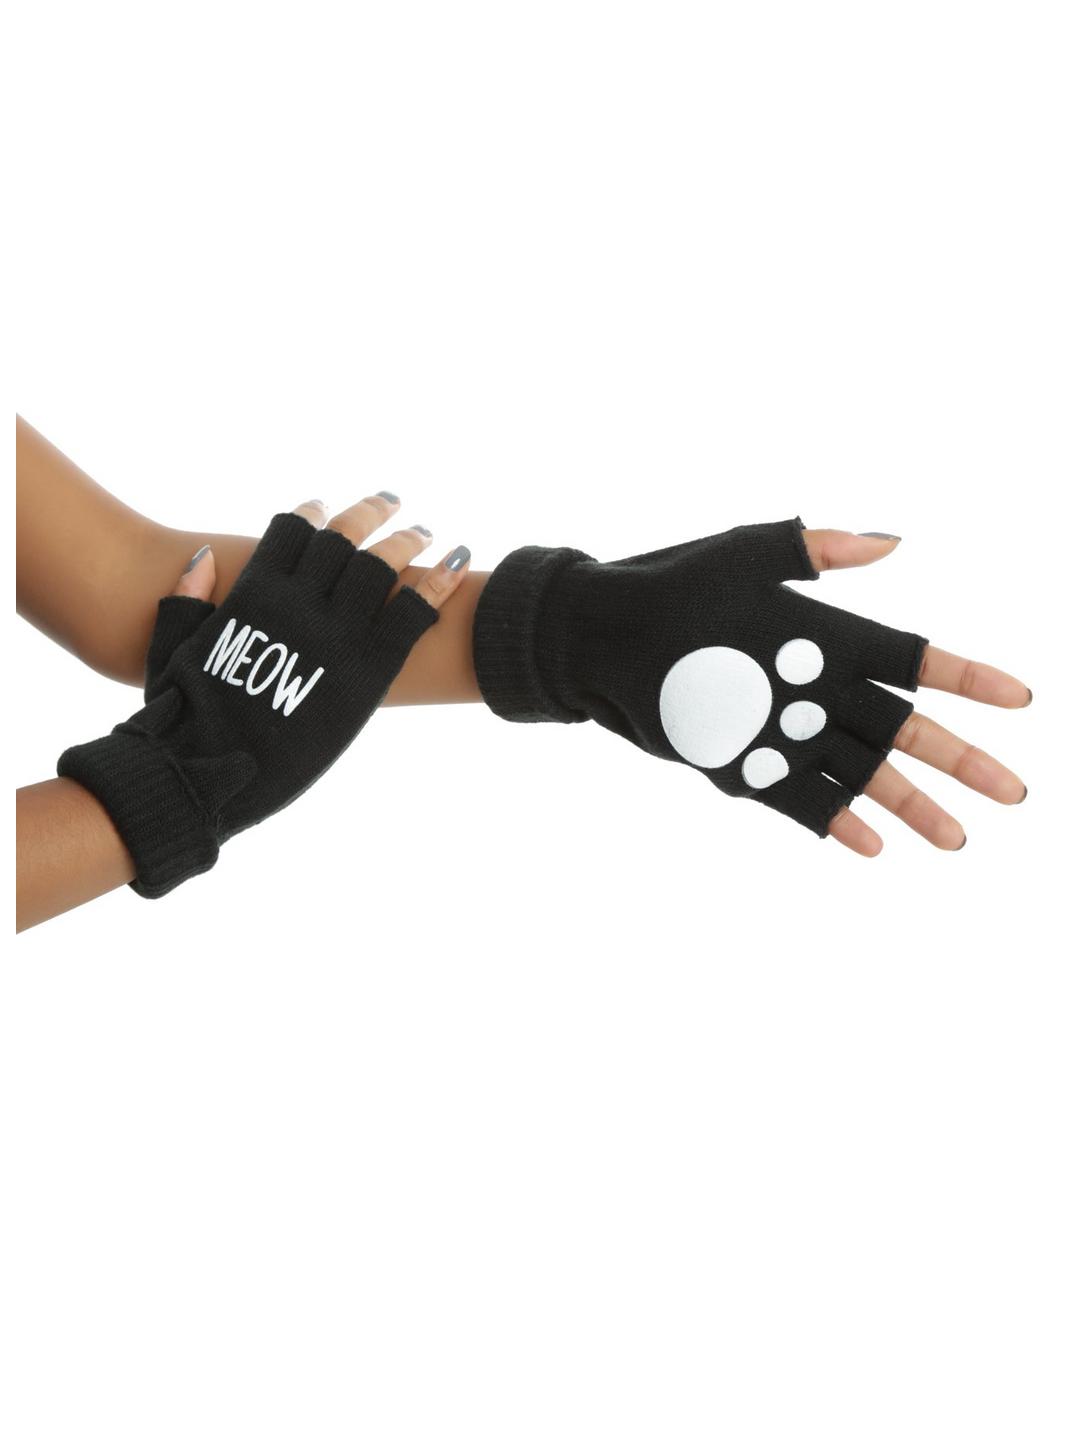 Meow Paw Print Black Fingerless Gloves, , hi-res